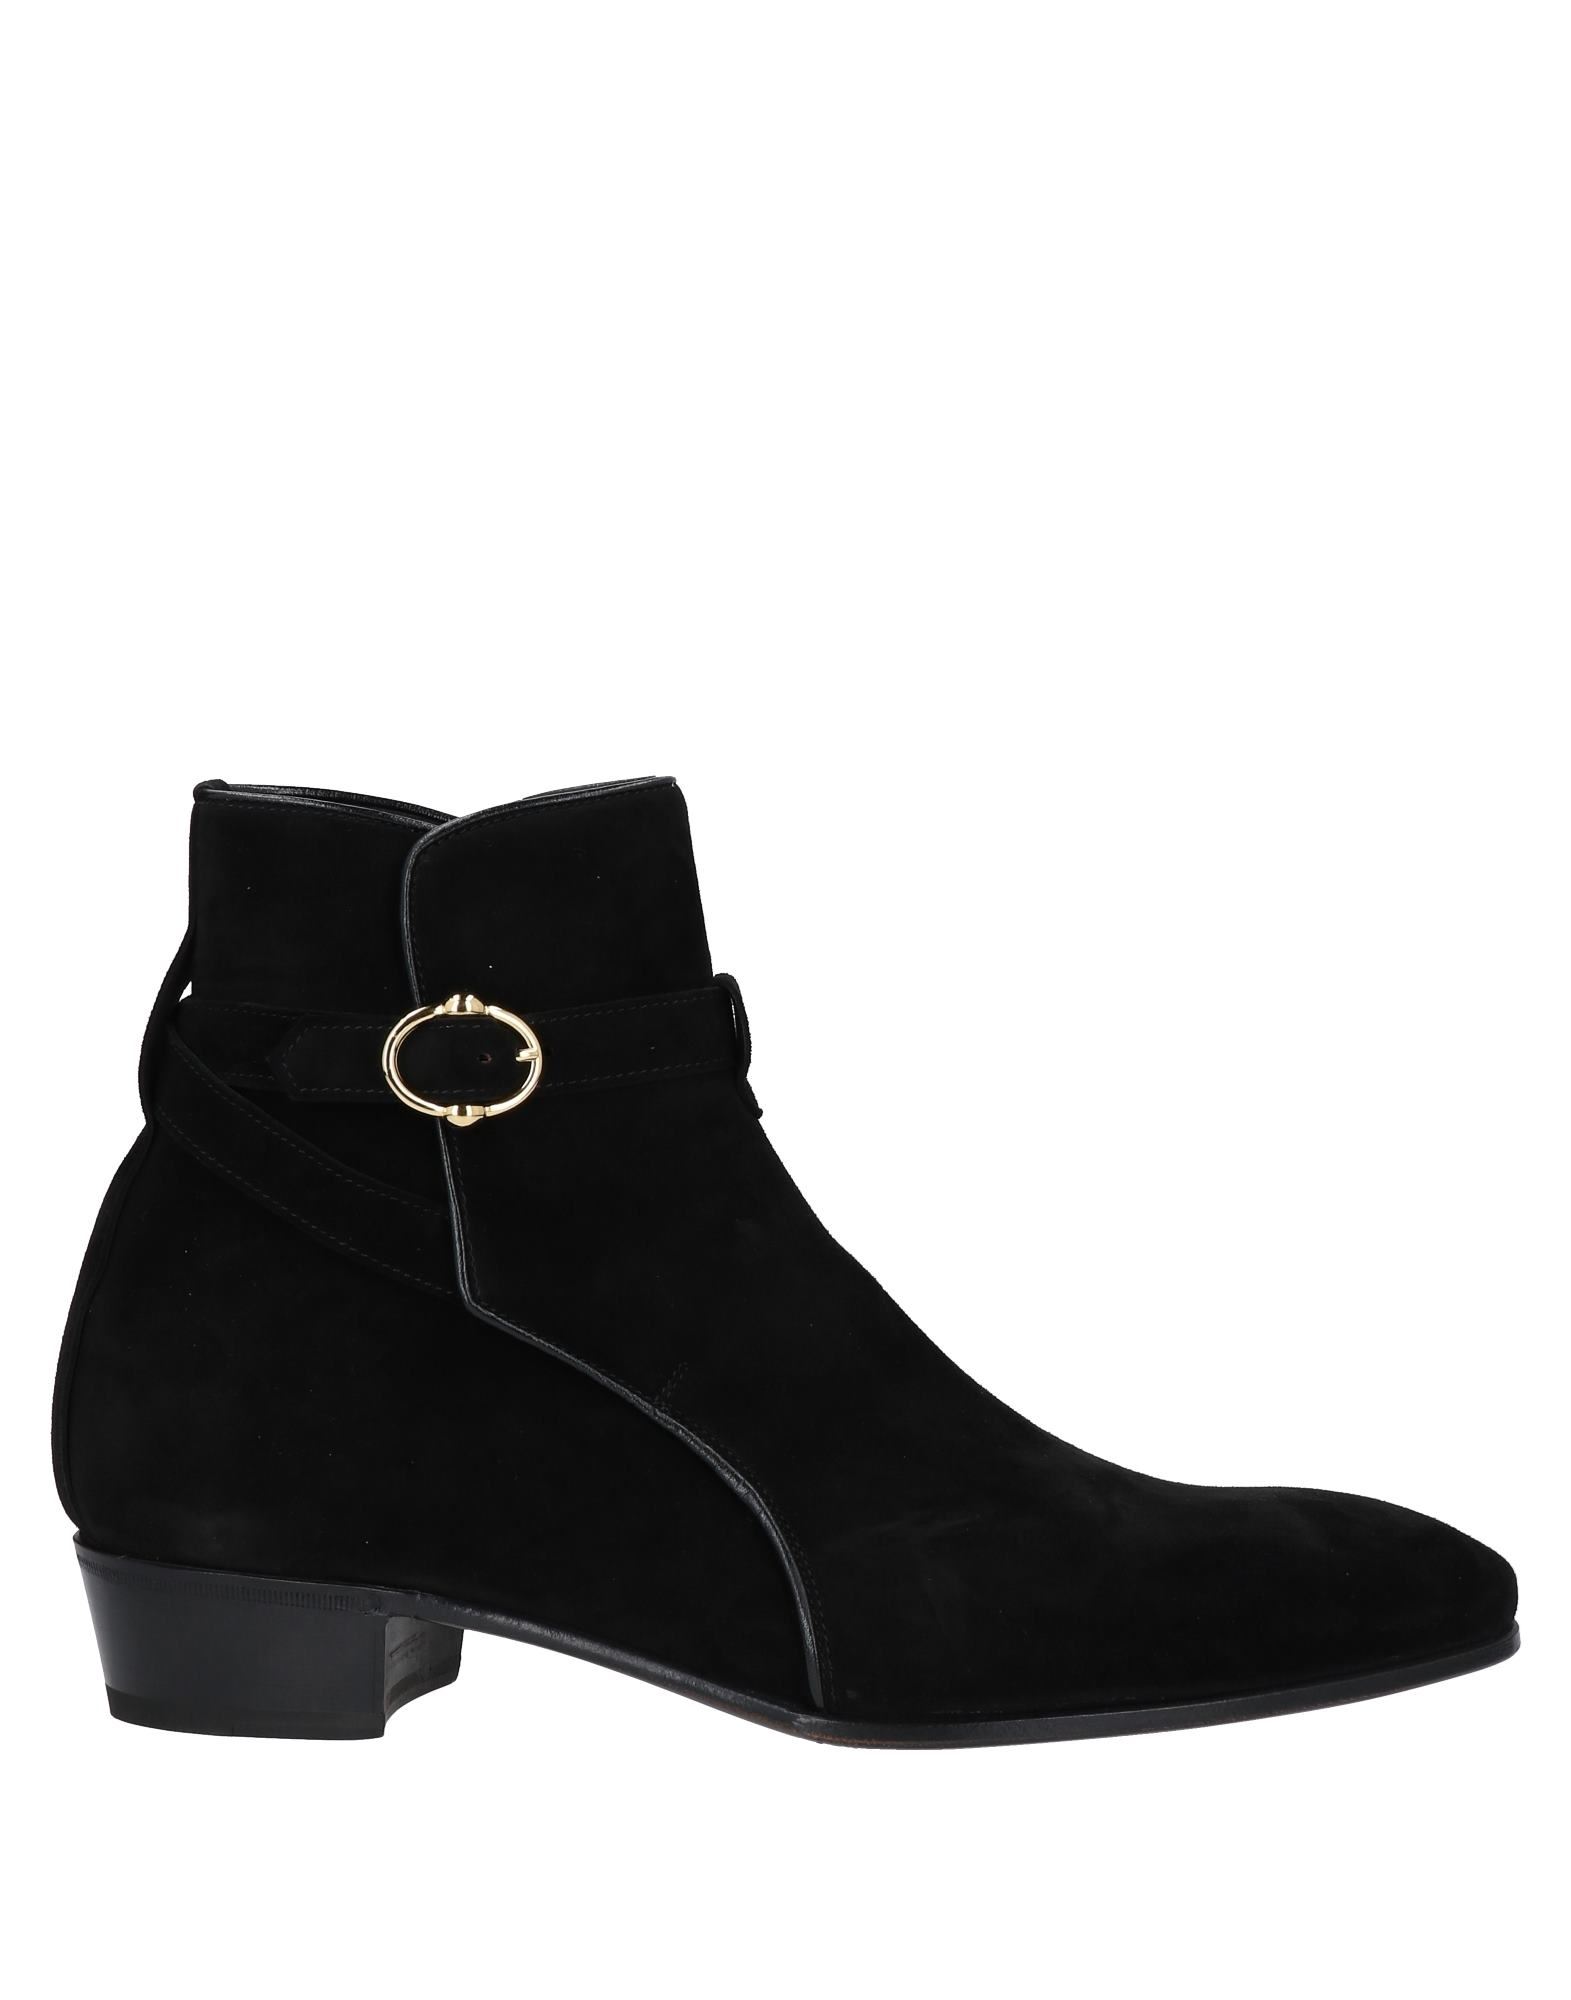 Shop Lidfort Man Ankle Boots Black Size 7 Soft Leather